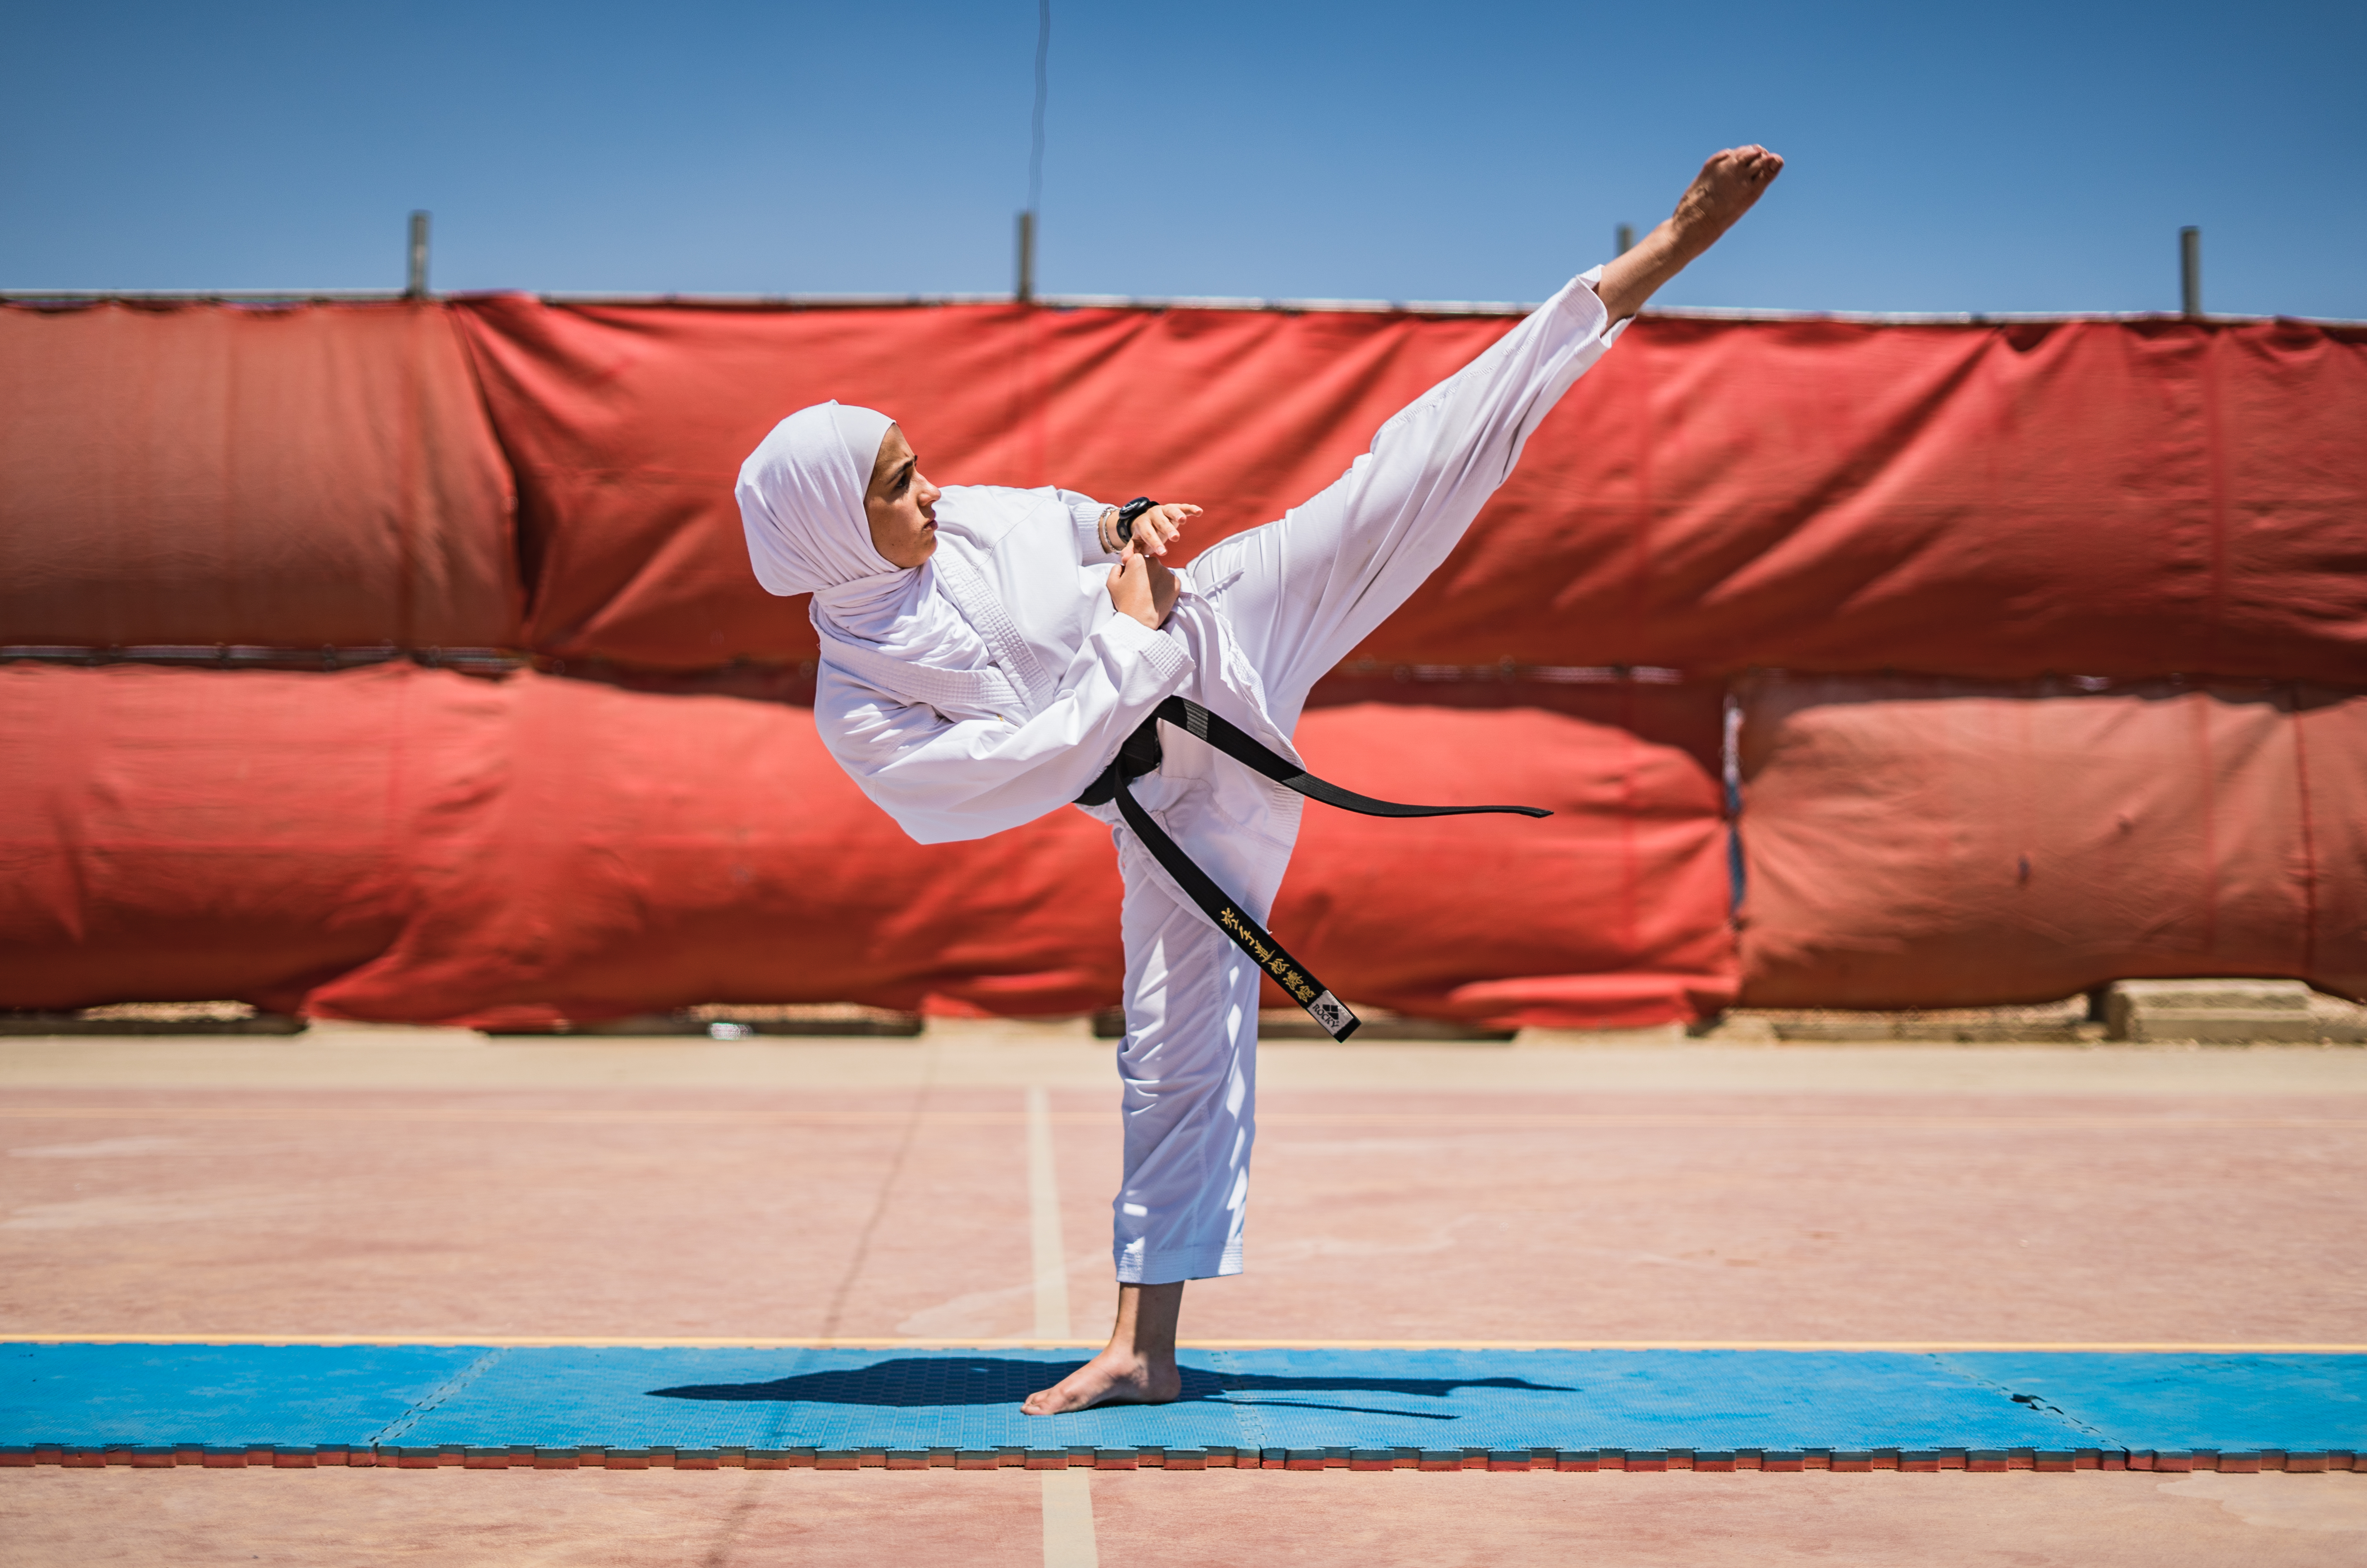 Girl demonstrates karate move in refugee camp in Jordan